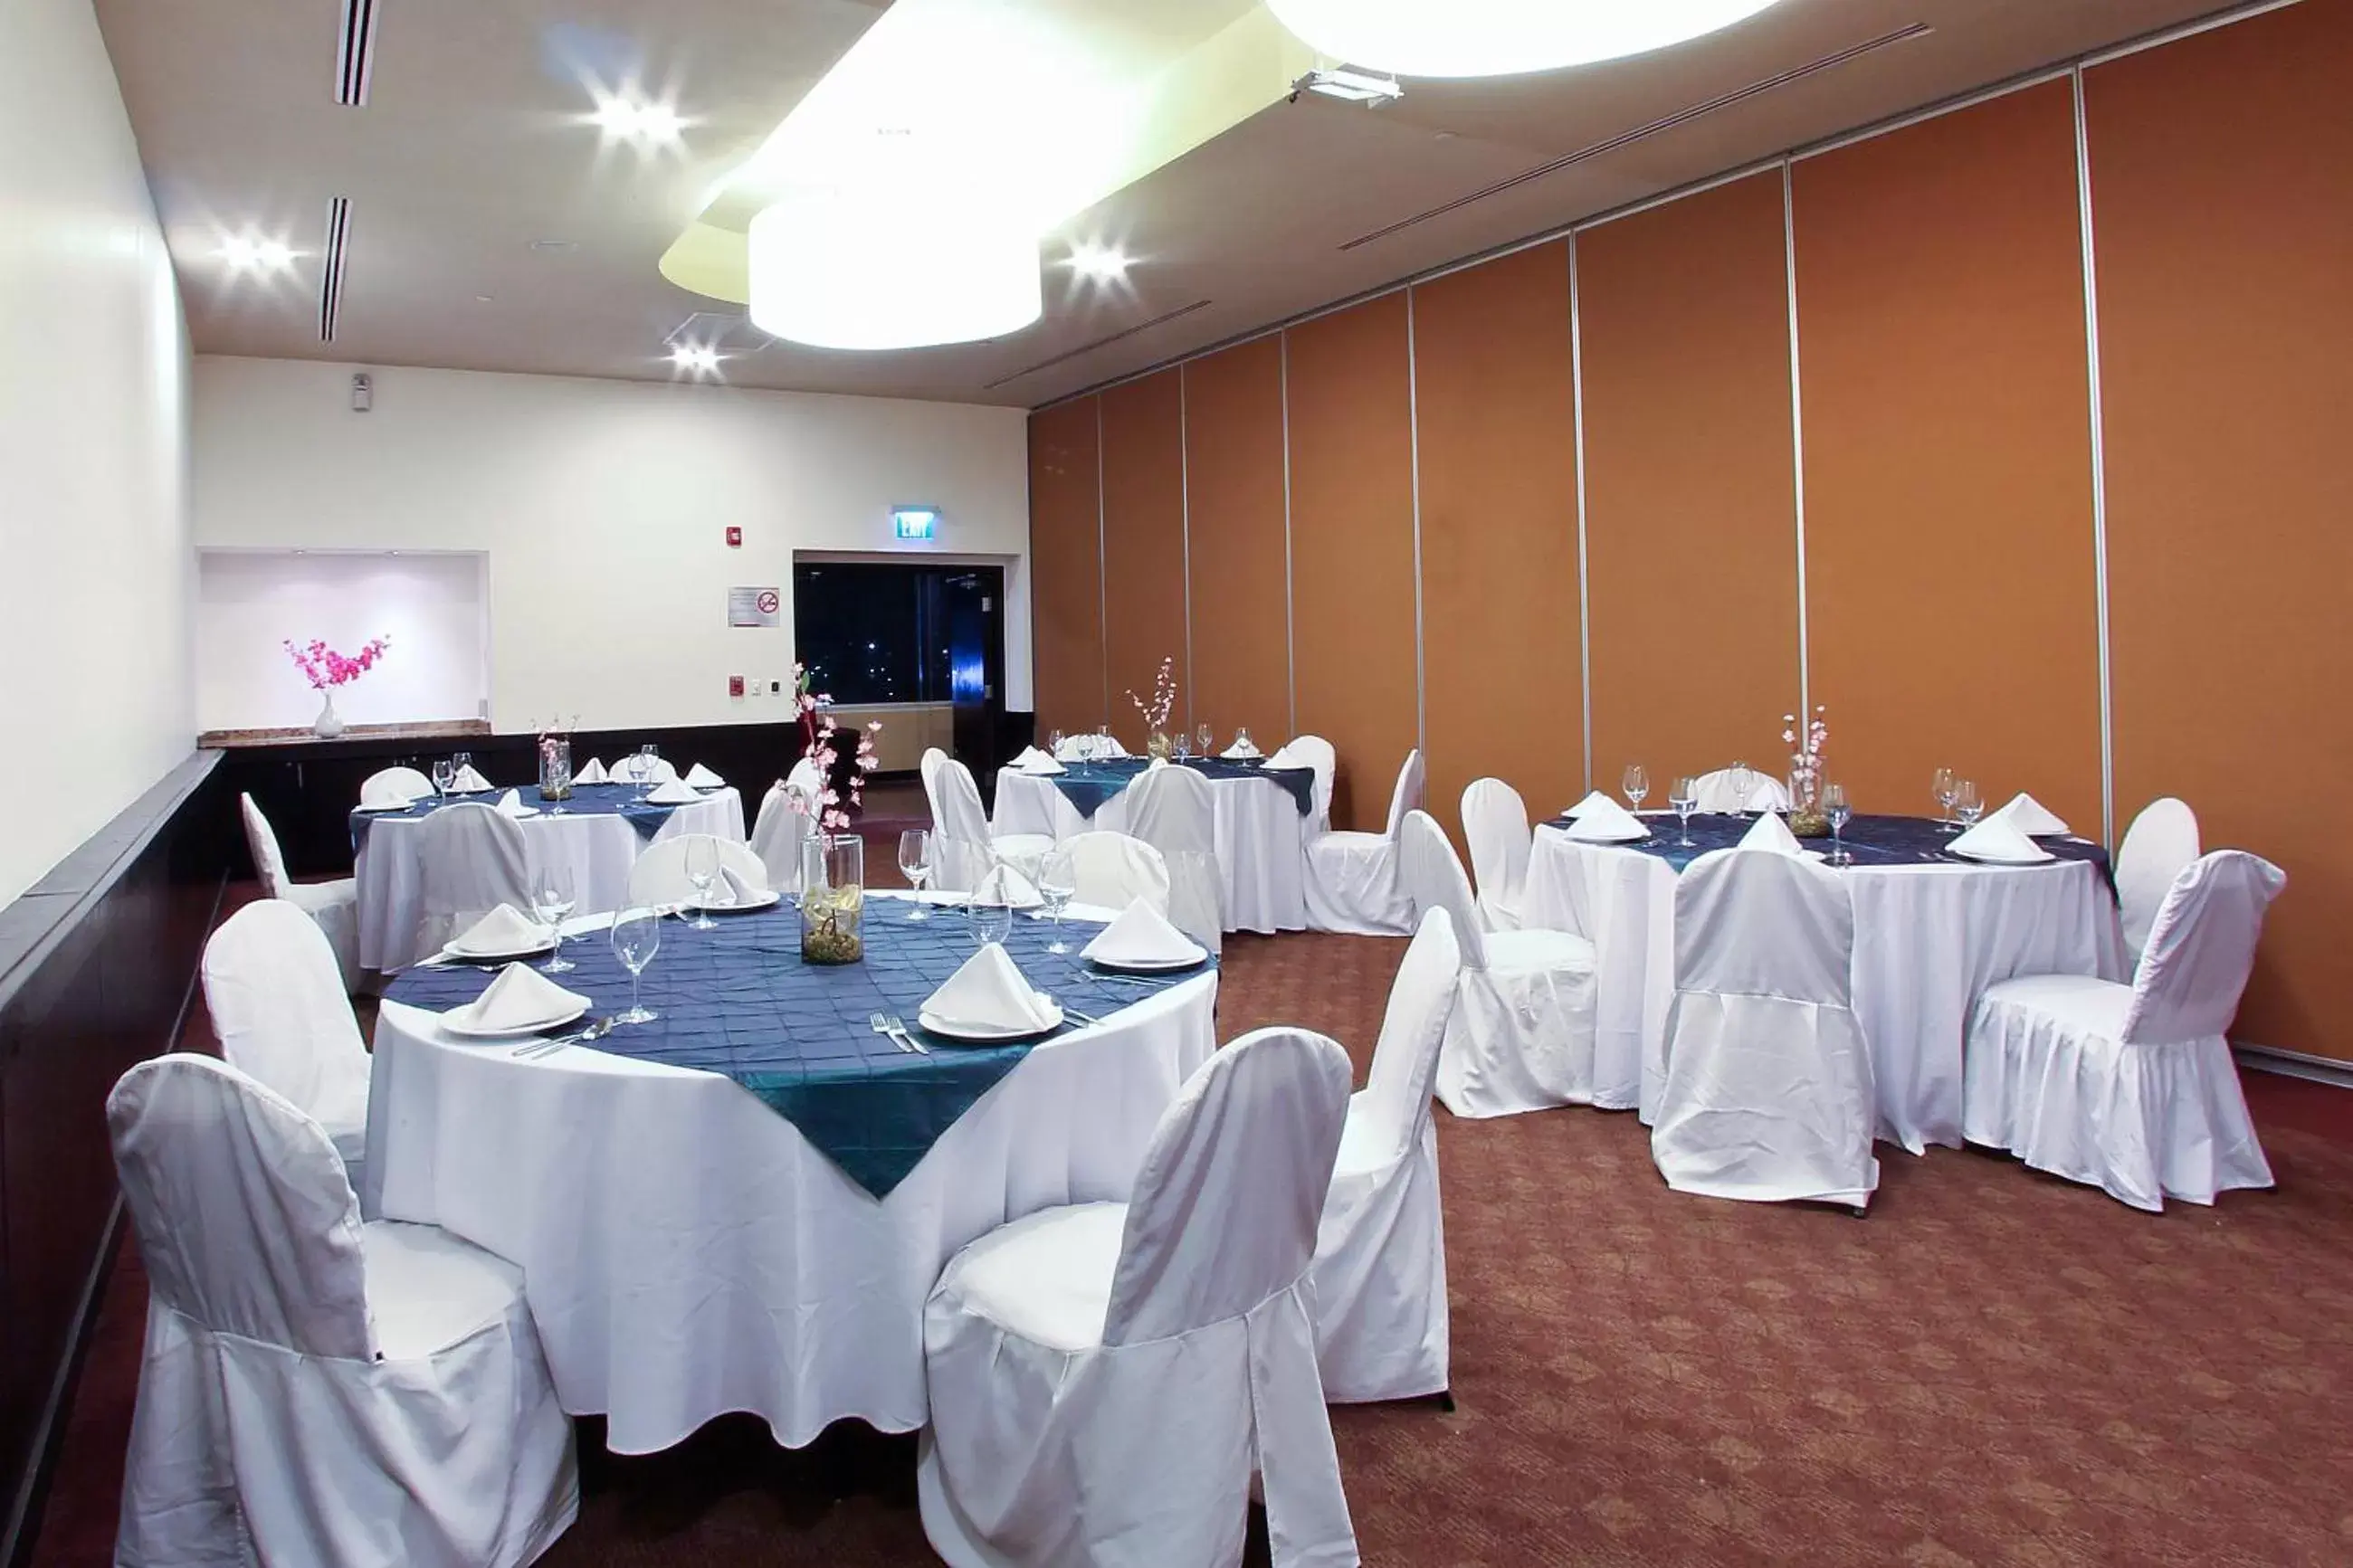 Meeting/conference room, Banquet Facilities in Fiesta Inn Durango